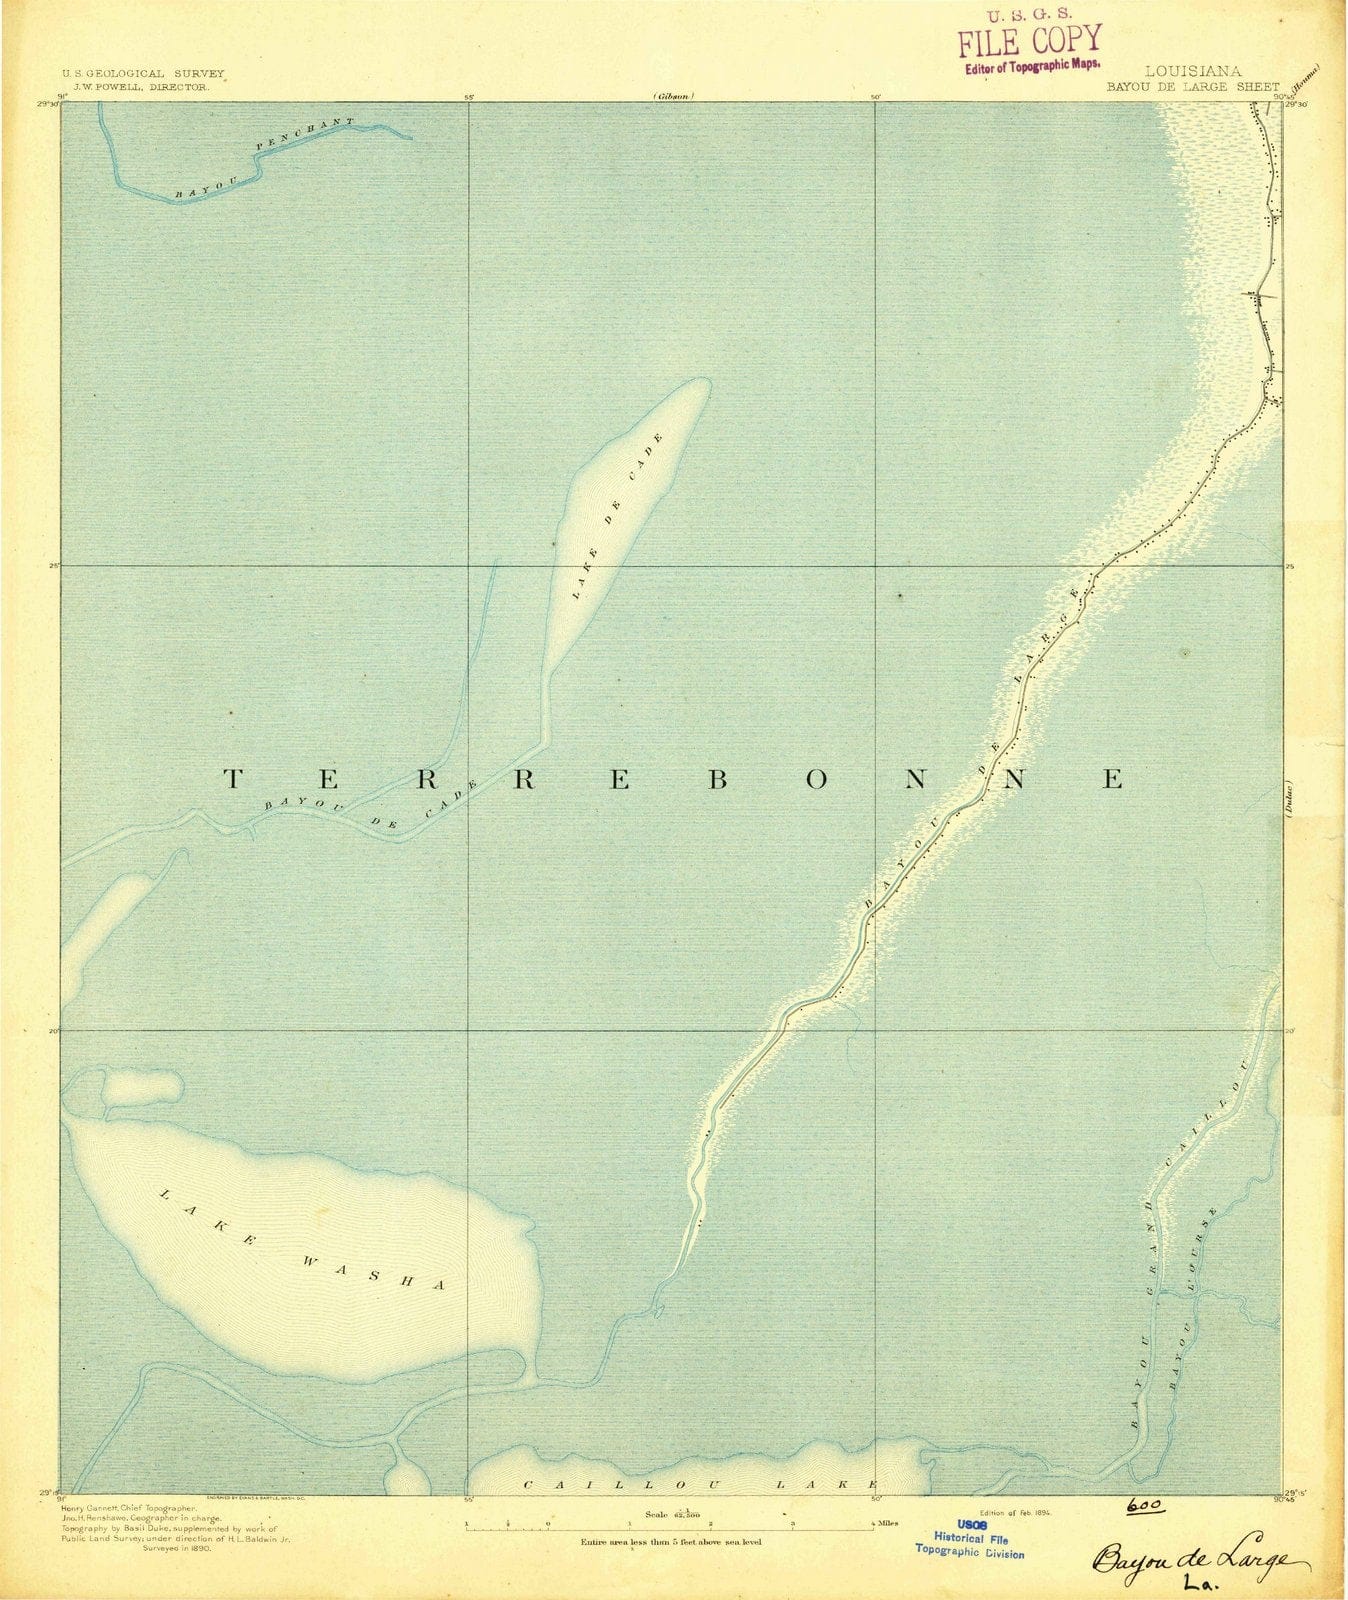 1894 Bayoue Large, LA - Louisiana - USGS Topographic Map